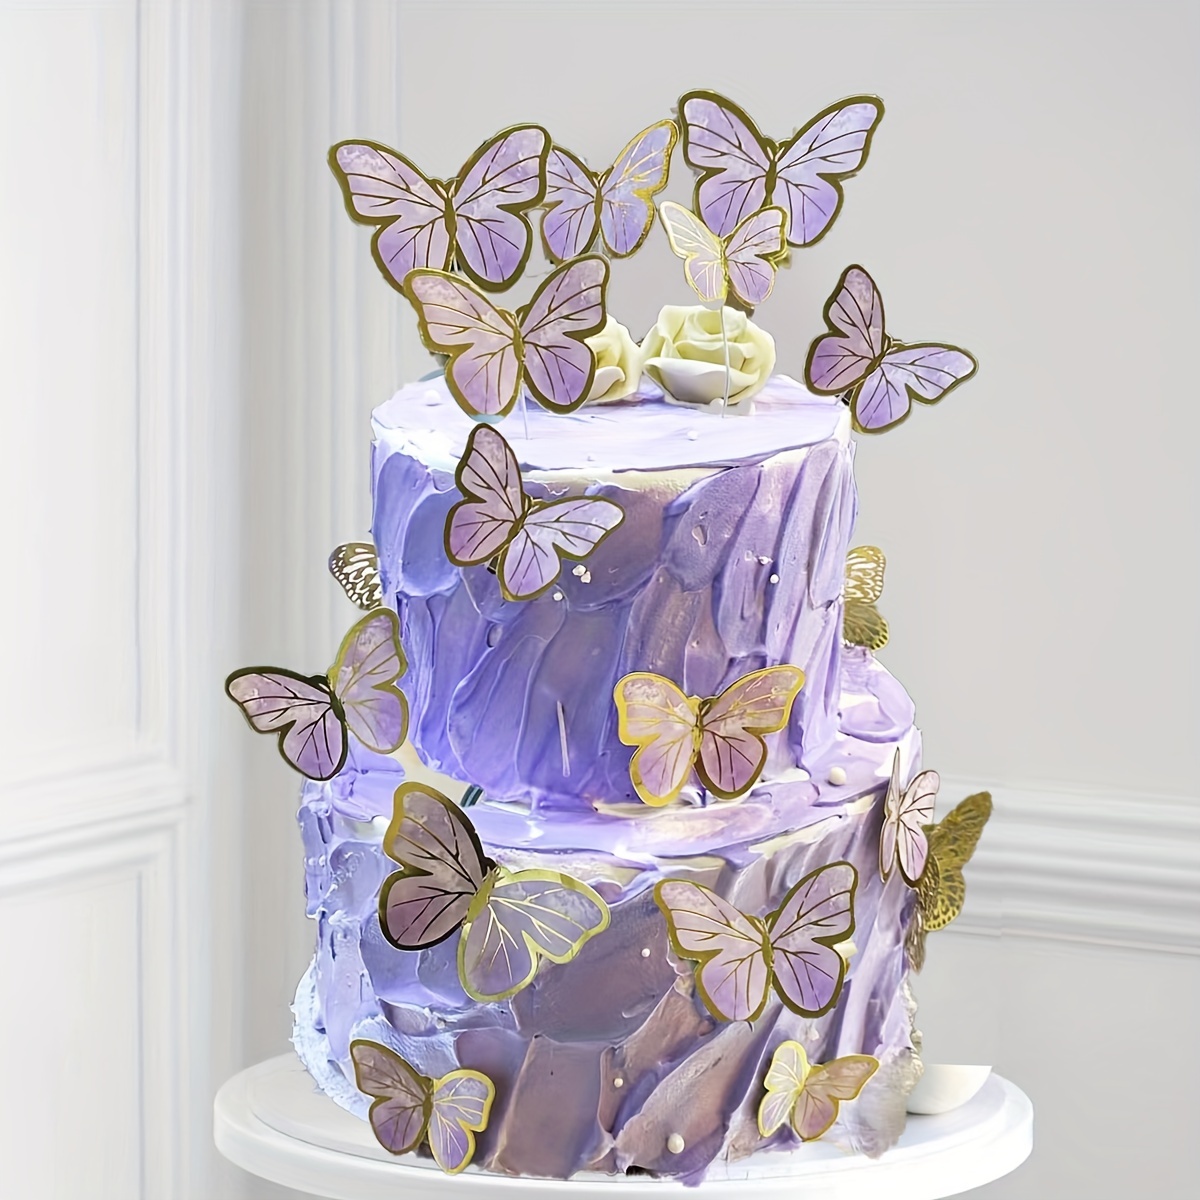 pink and purple birthday cakes